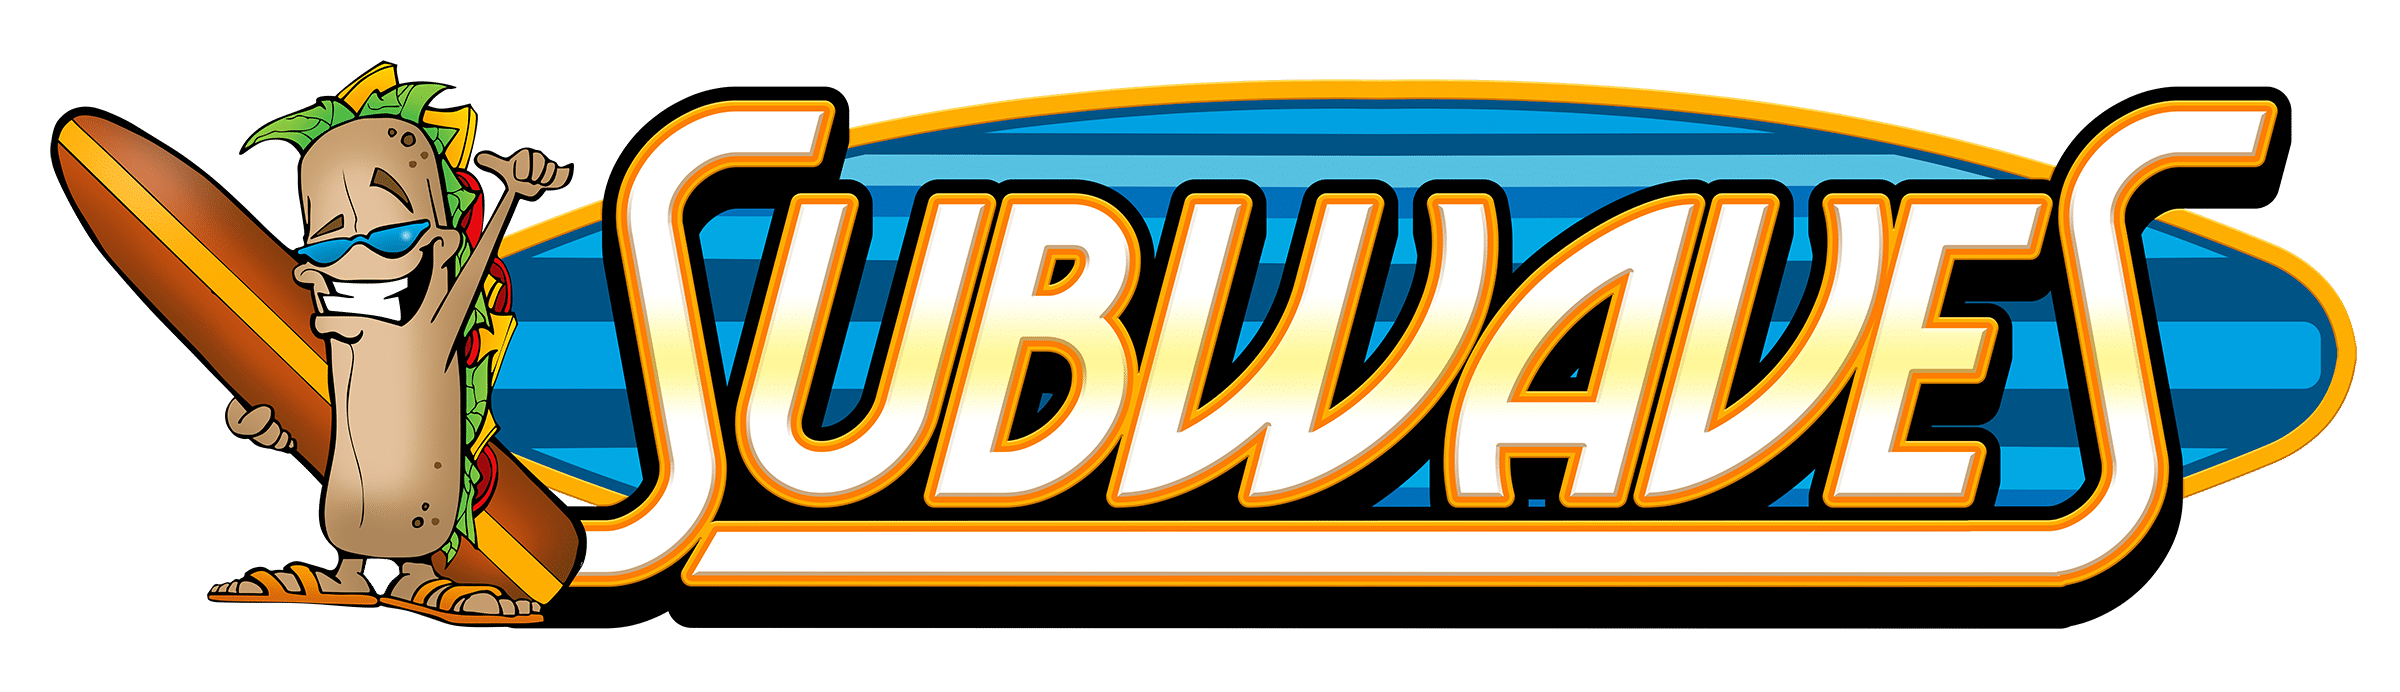 subwave logo